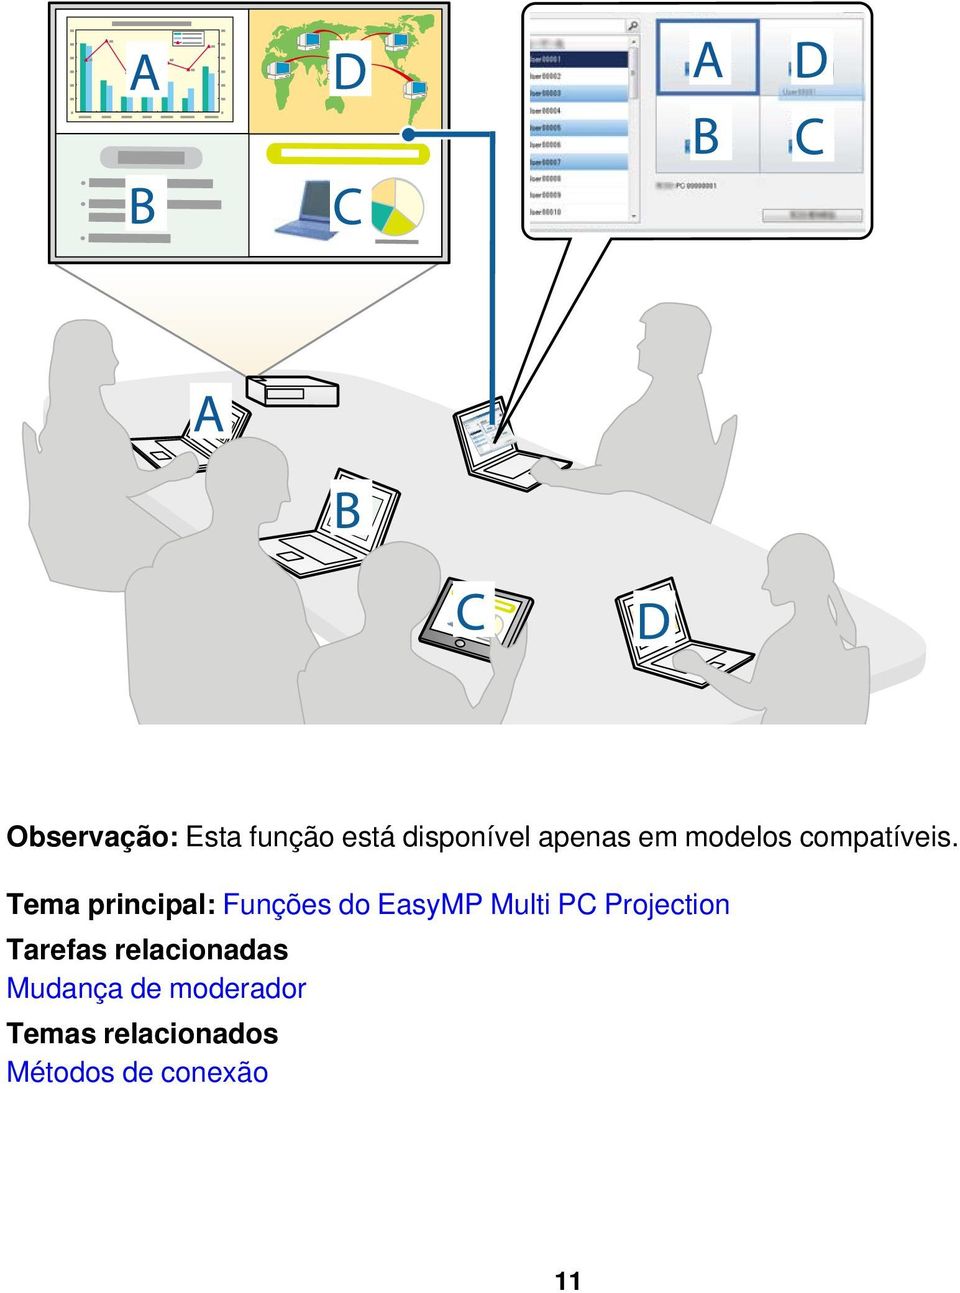 Tema principal: Funções do EasyMP Multi PC